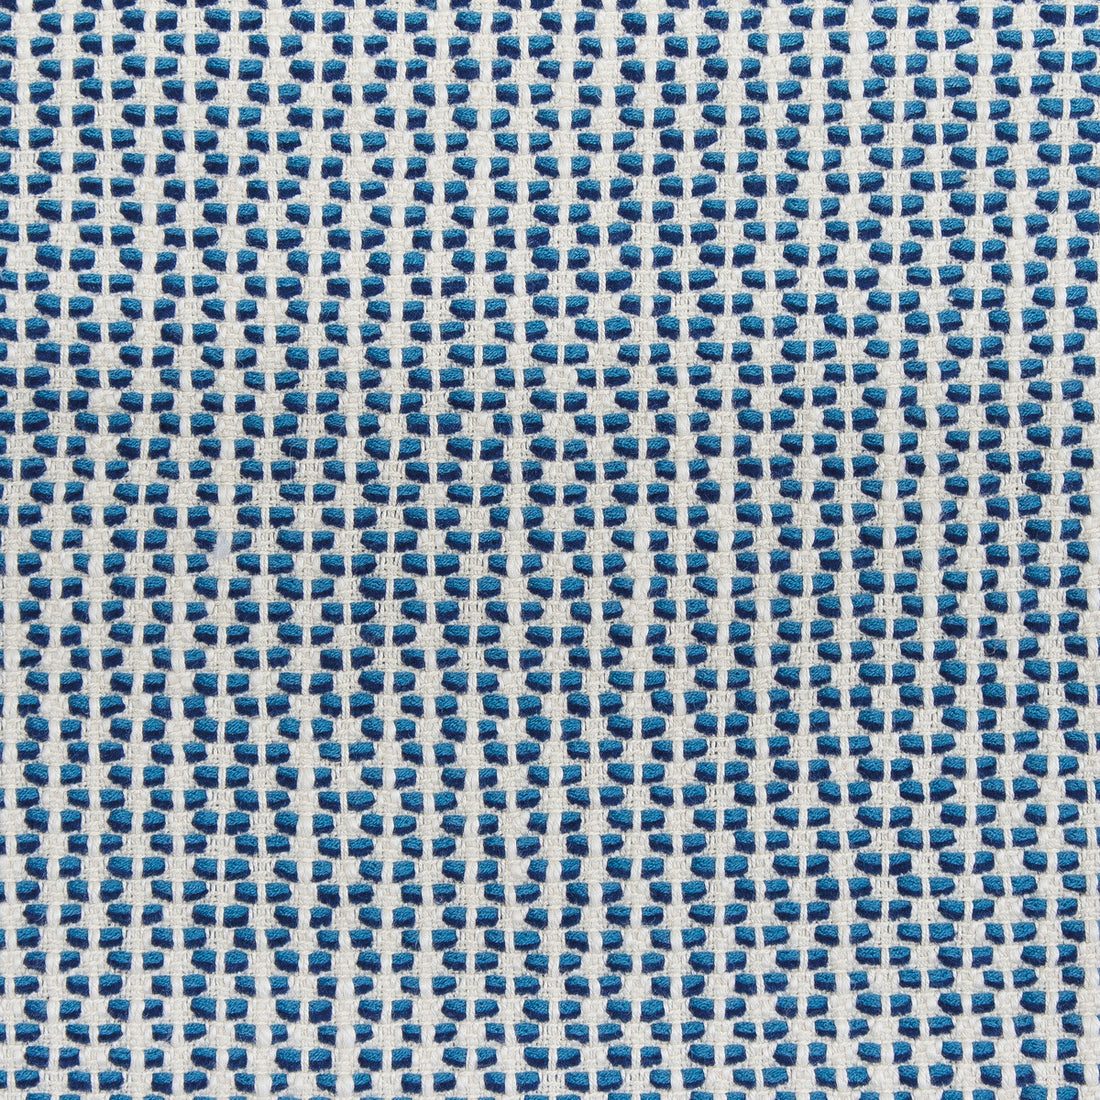 Palenque fabric in azul color - pattern GDT5595.002.0 - by Gaston y Daniela in the Gaston Nuevo Mundo collection